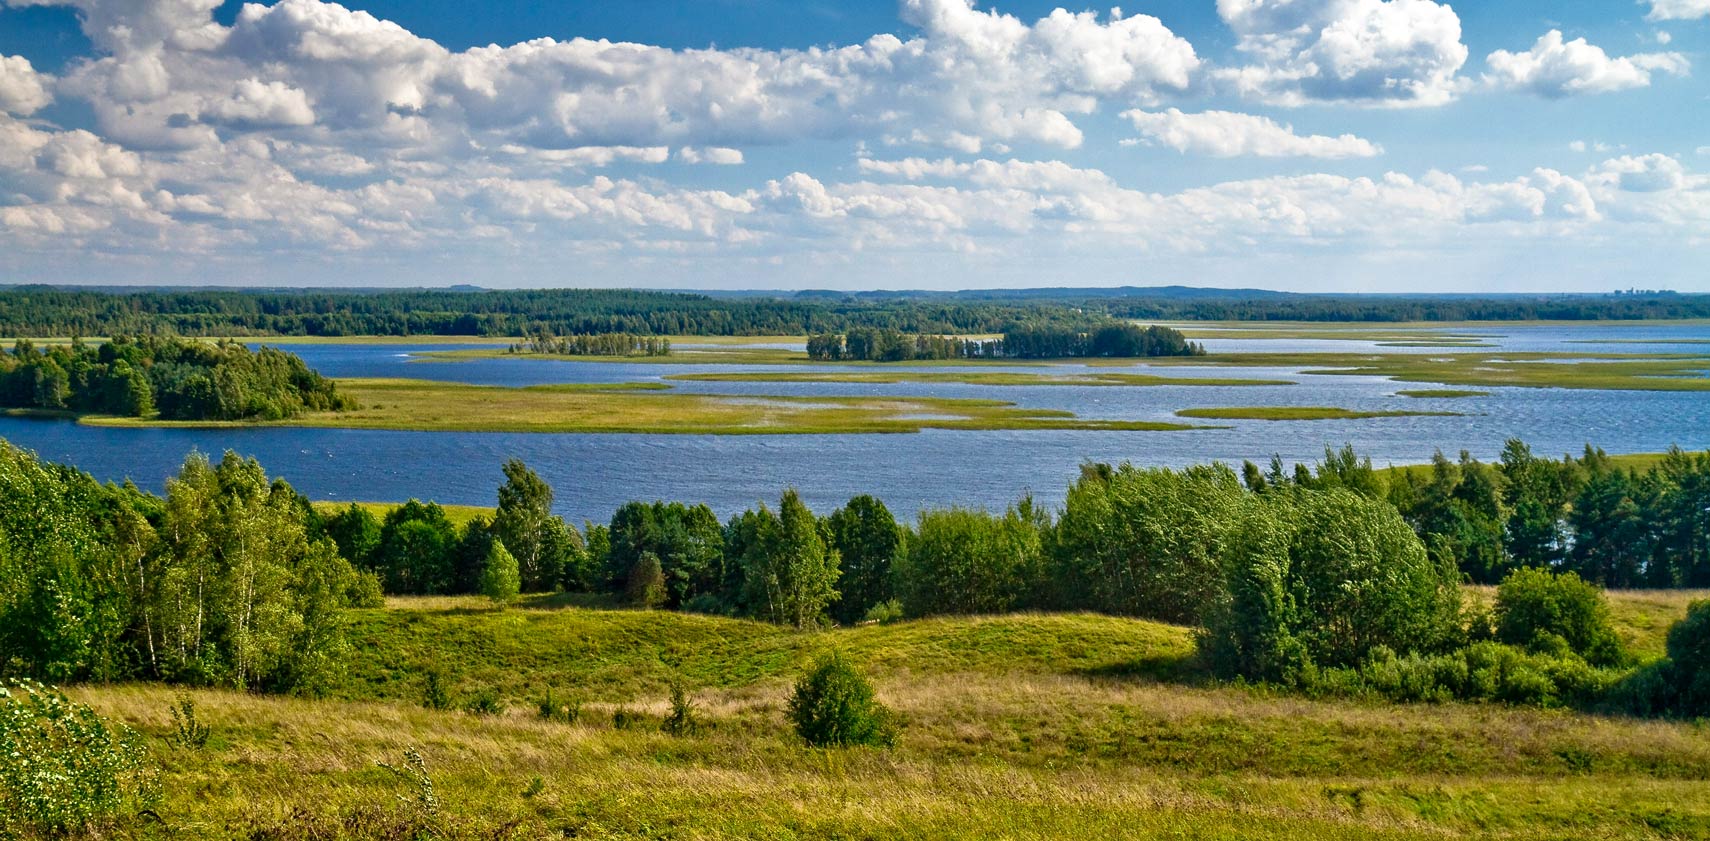 Strusta is a freshwater lake in the Braslaw Lakes national park of Belarus